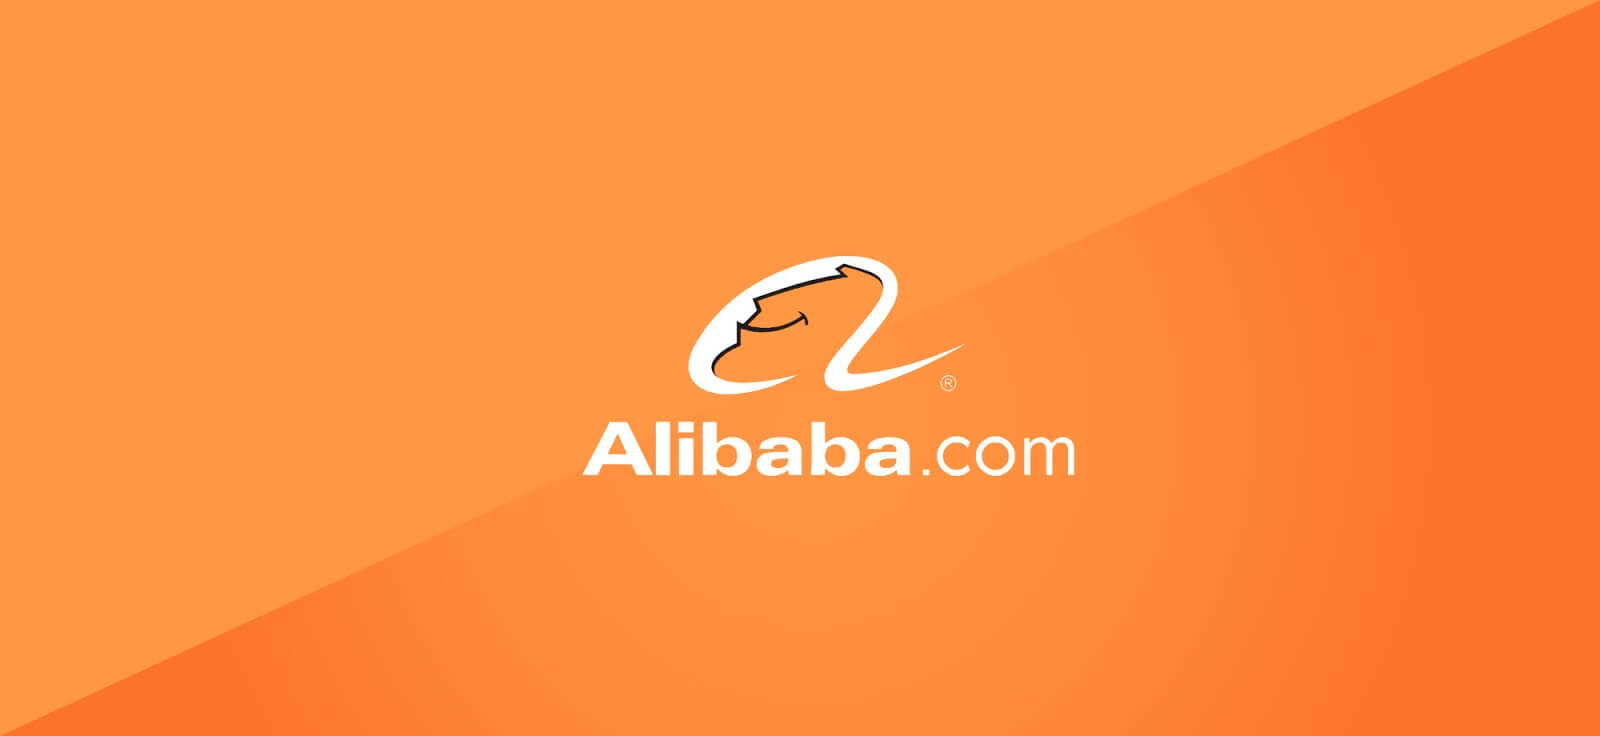 Услуги посредника с Alibaba, в чем преимущества